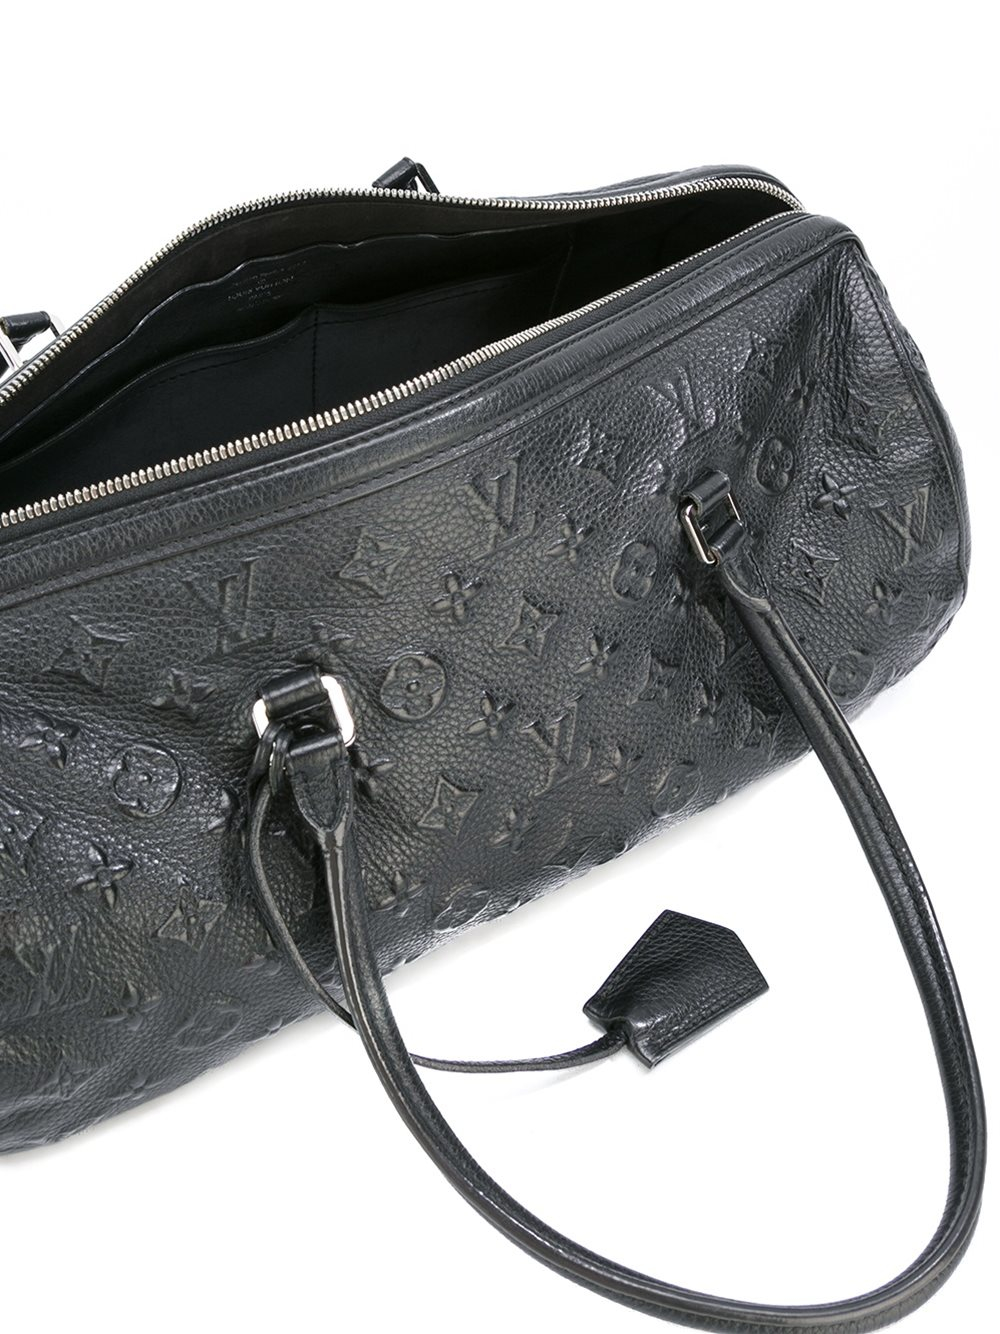 Lyst - Louis Vuitton Monogram Shoulder Bag in Black